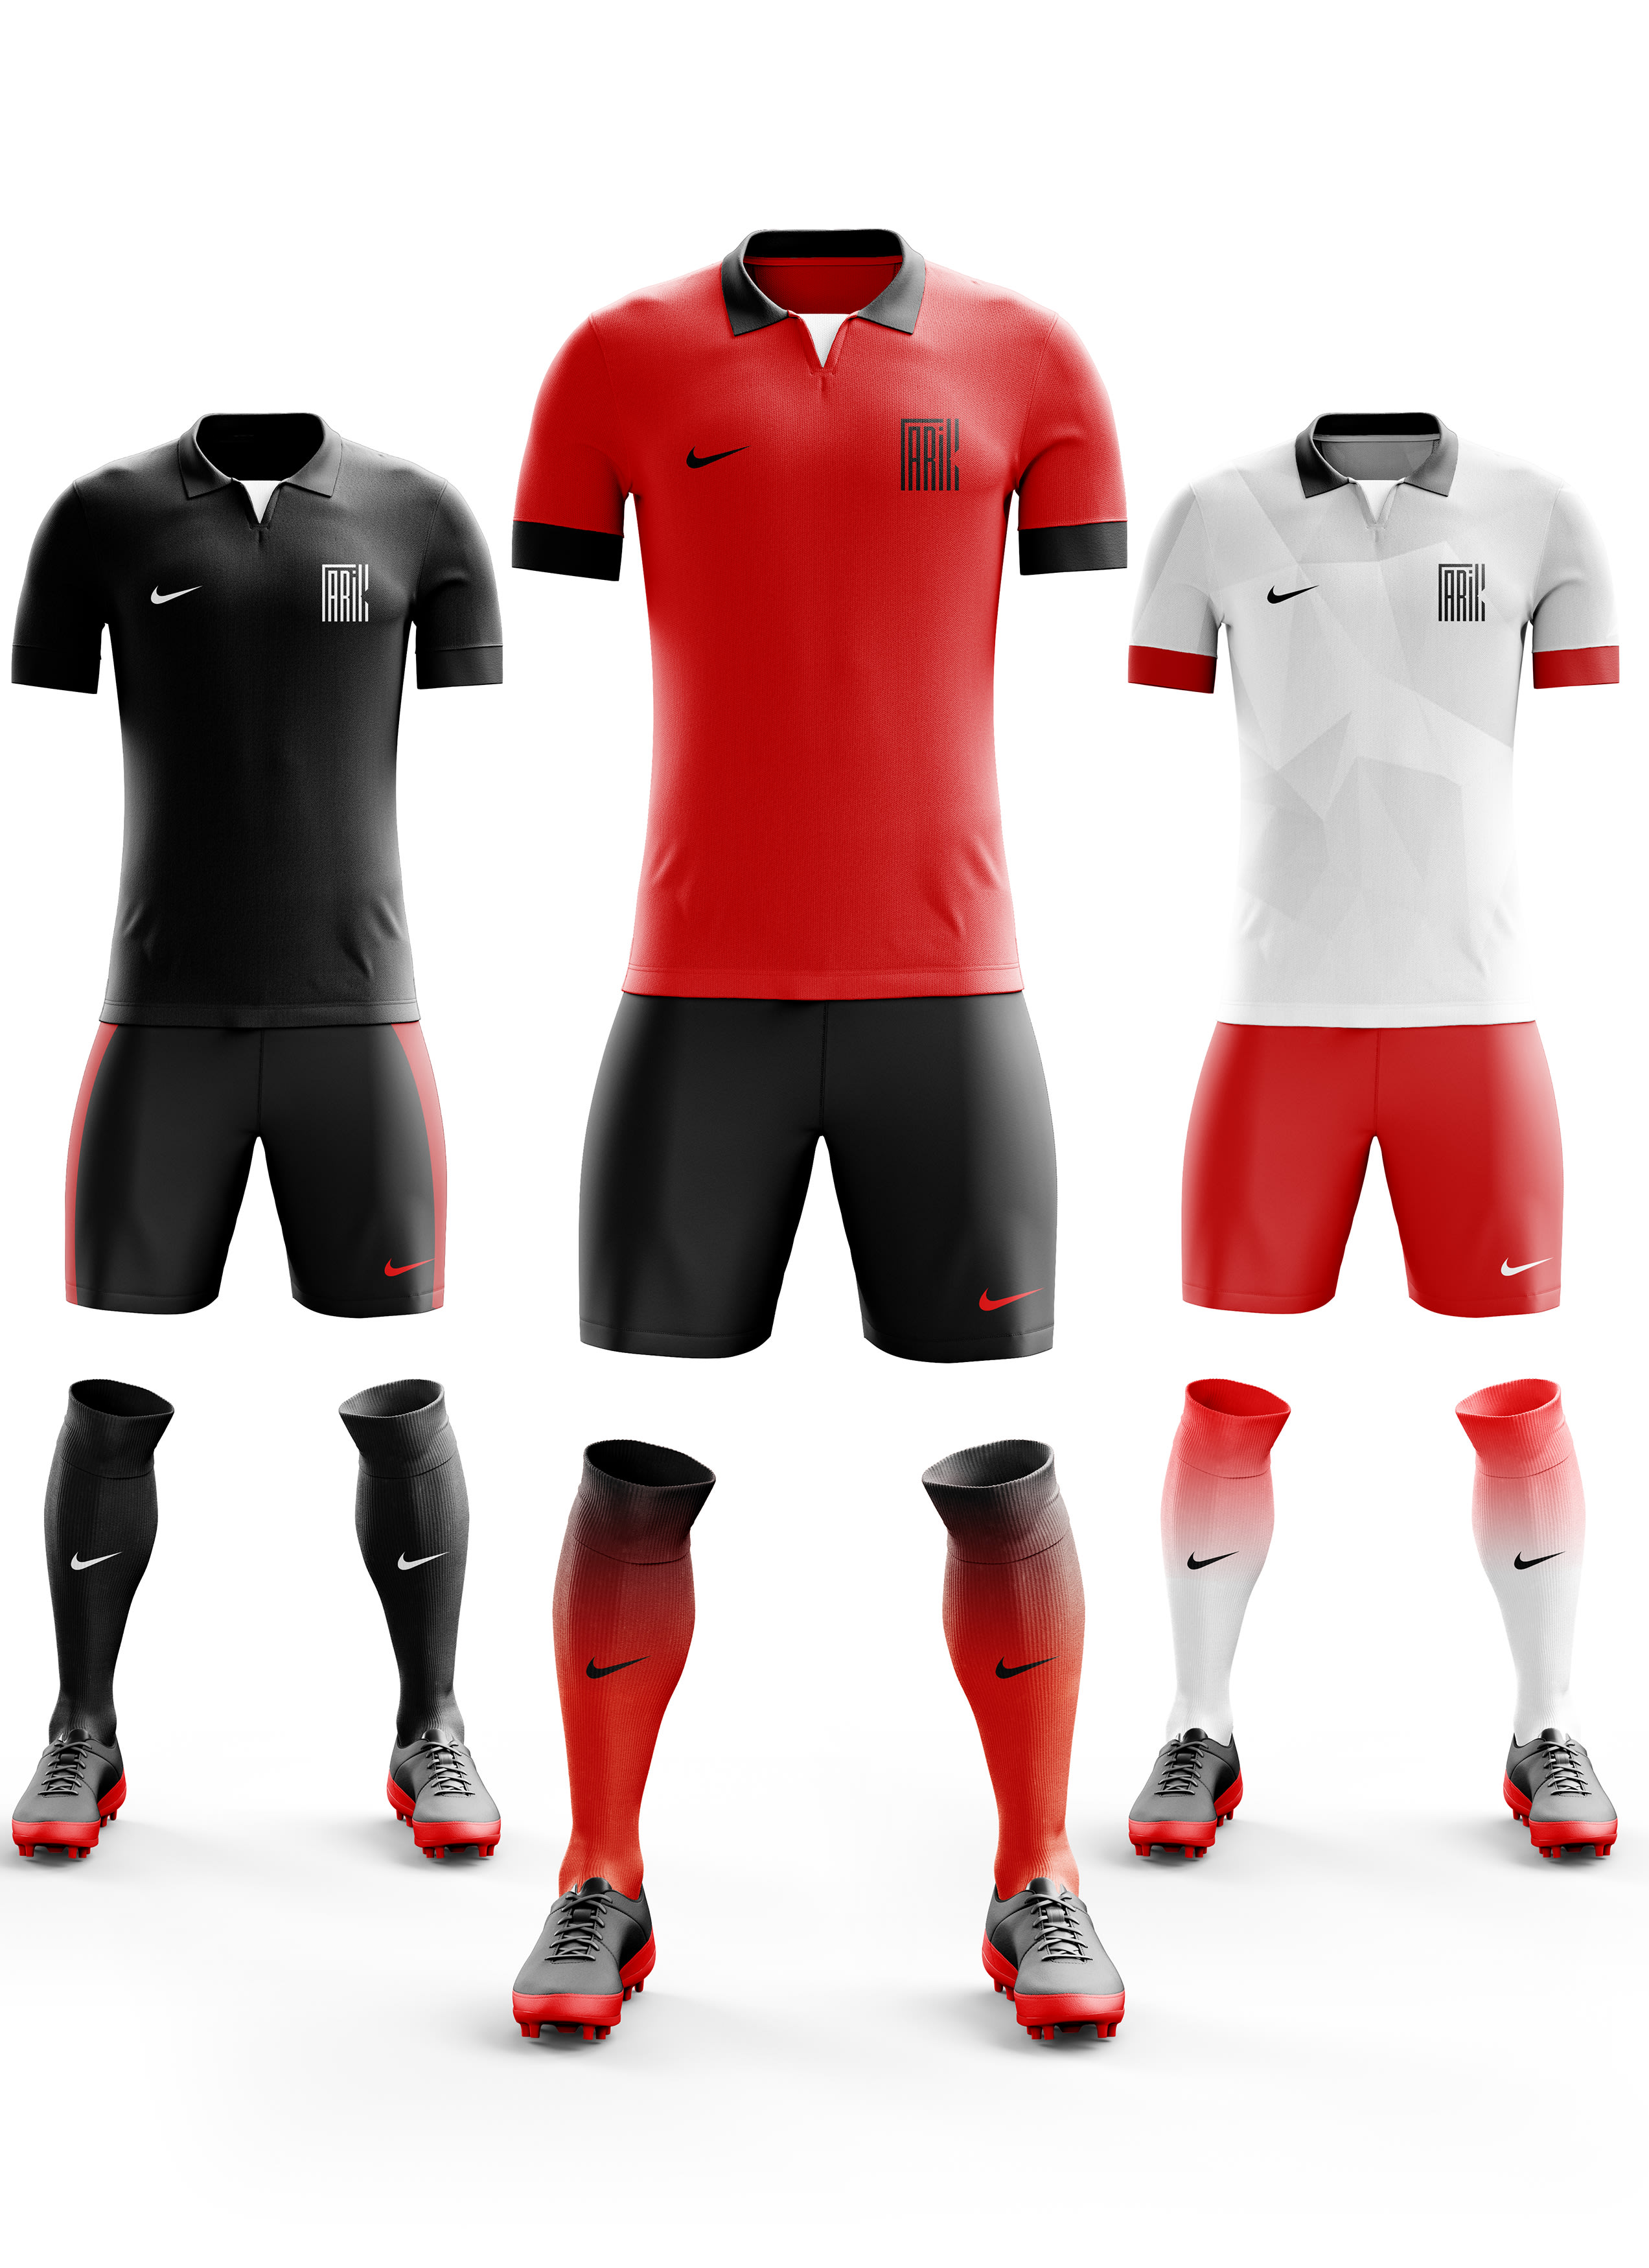 Unique soccer jersey design by Tarikjow